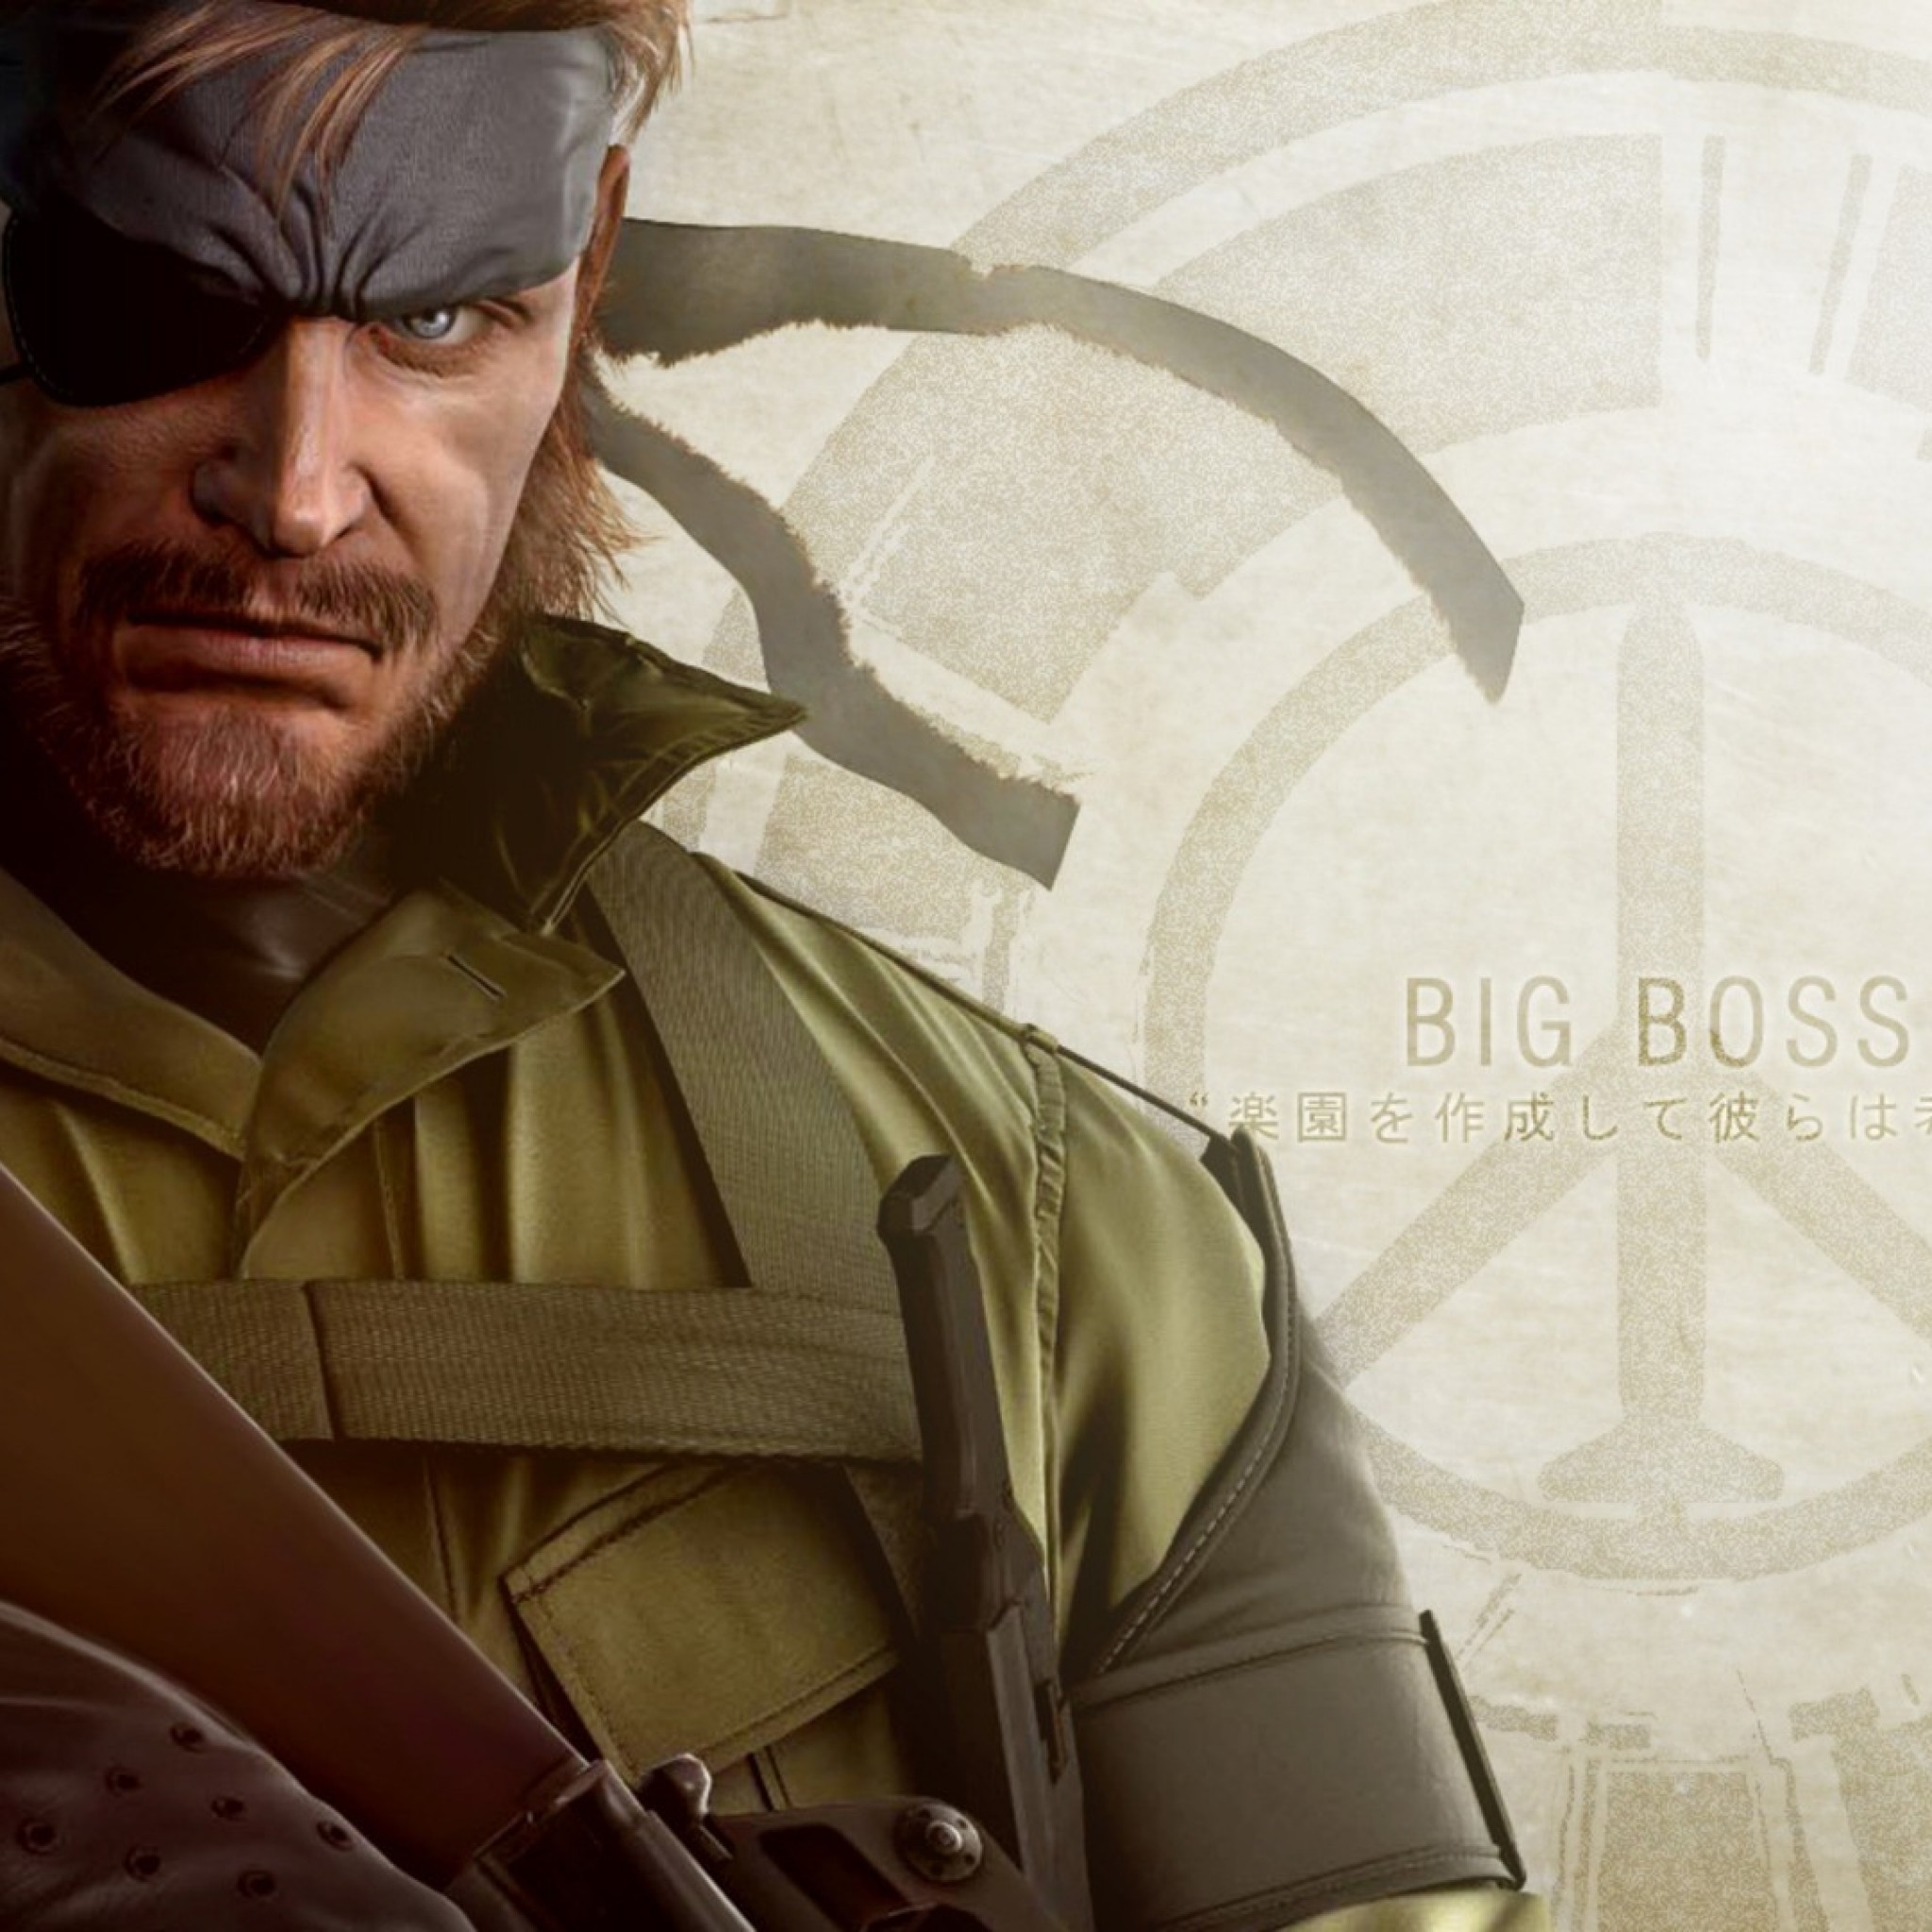 Читать малыш для биг босса. Big Boss Metal Gear. Metal Gear Solid big Boss. Биг босс Metal Gear на аватарку. Повязка Биг босса.